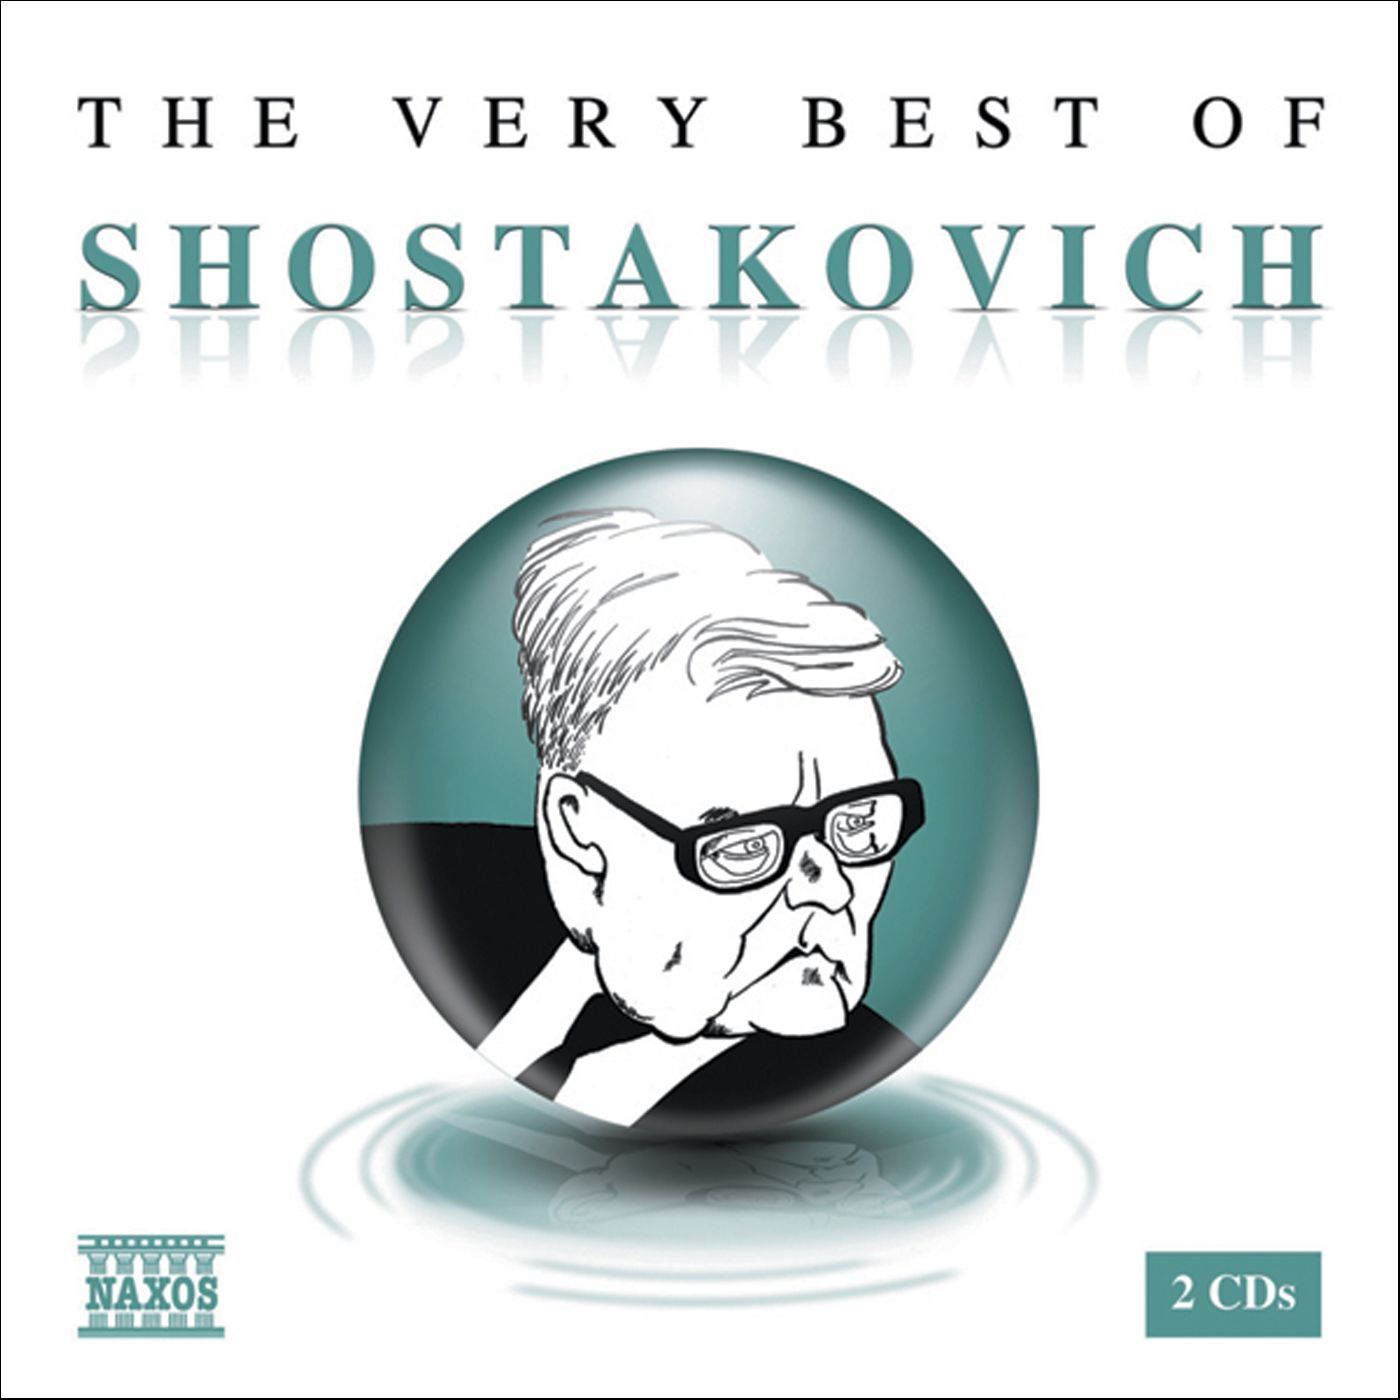 Джазовая сюита шостаковича. Шостакович портрет композитора. Dmitri Shostakovich Symphony no 1. Dmitri Shostakovich the very best of Naxos обложки.